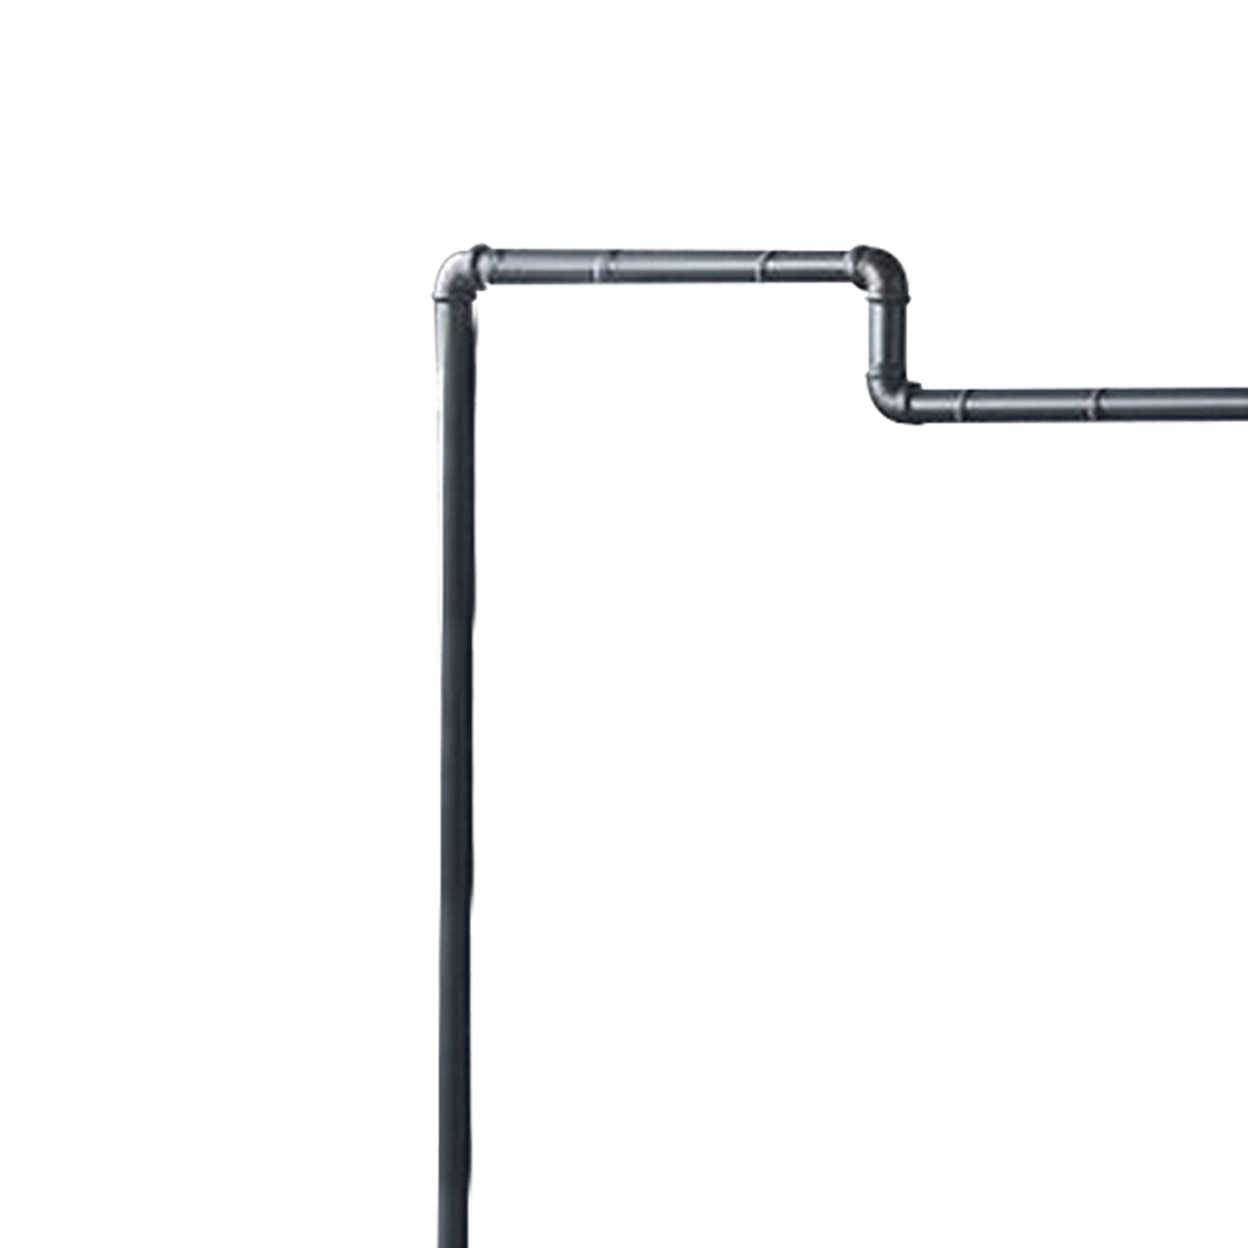 Hanger Rack With Pipe Design Tubular Frame And Casters, Brown, Saltoro Sherpi